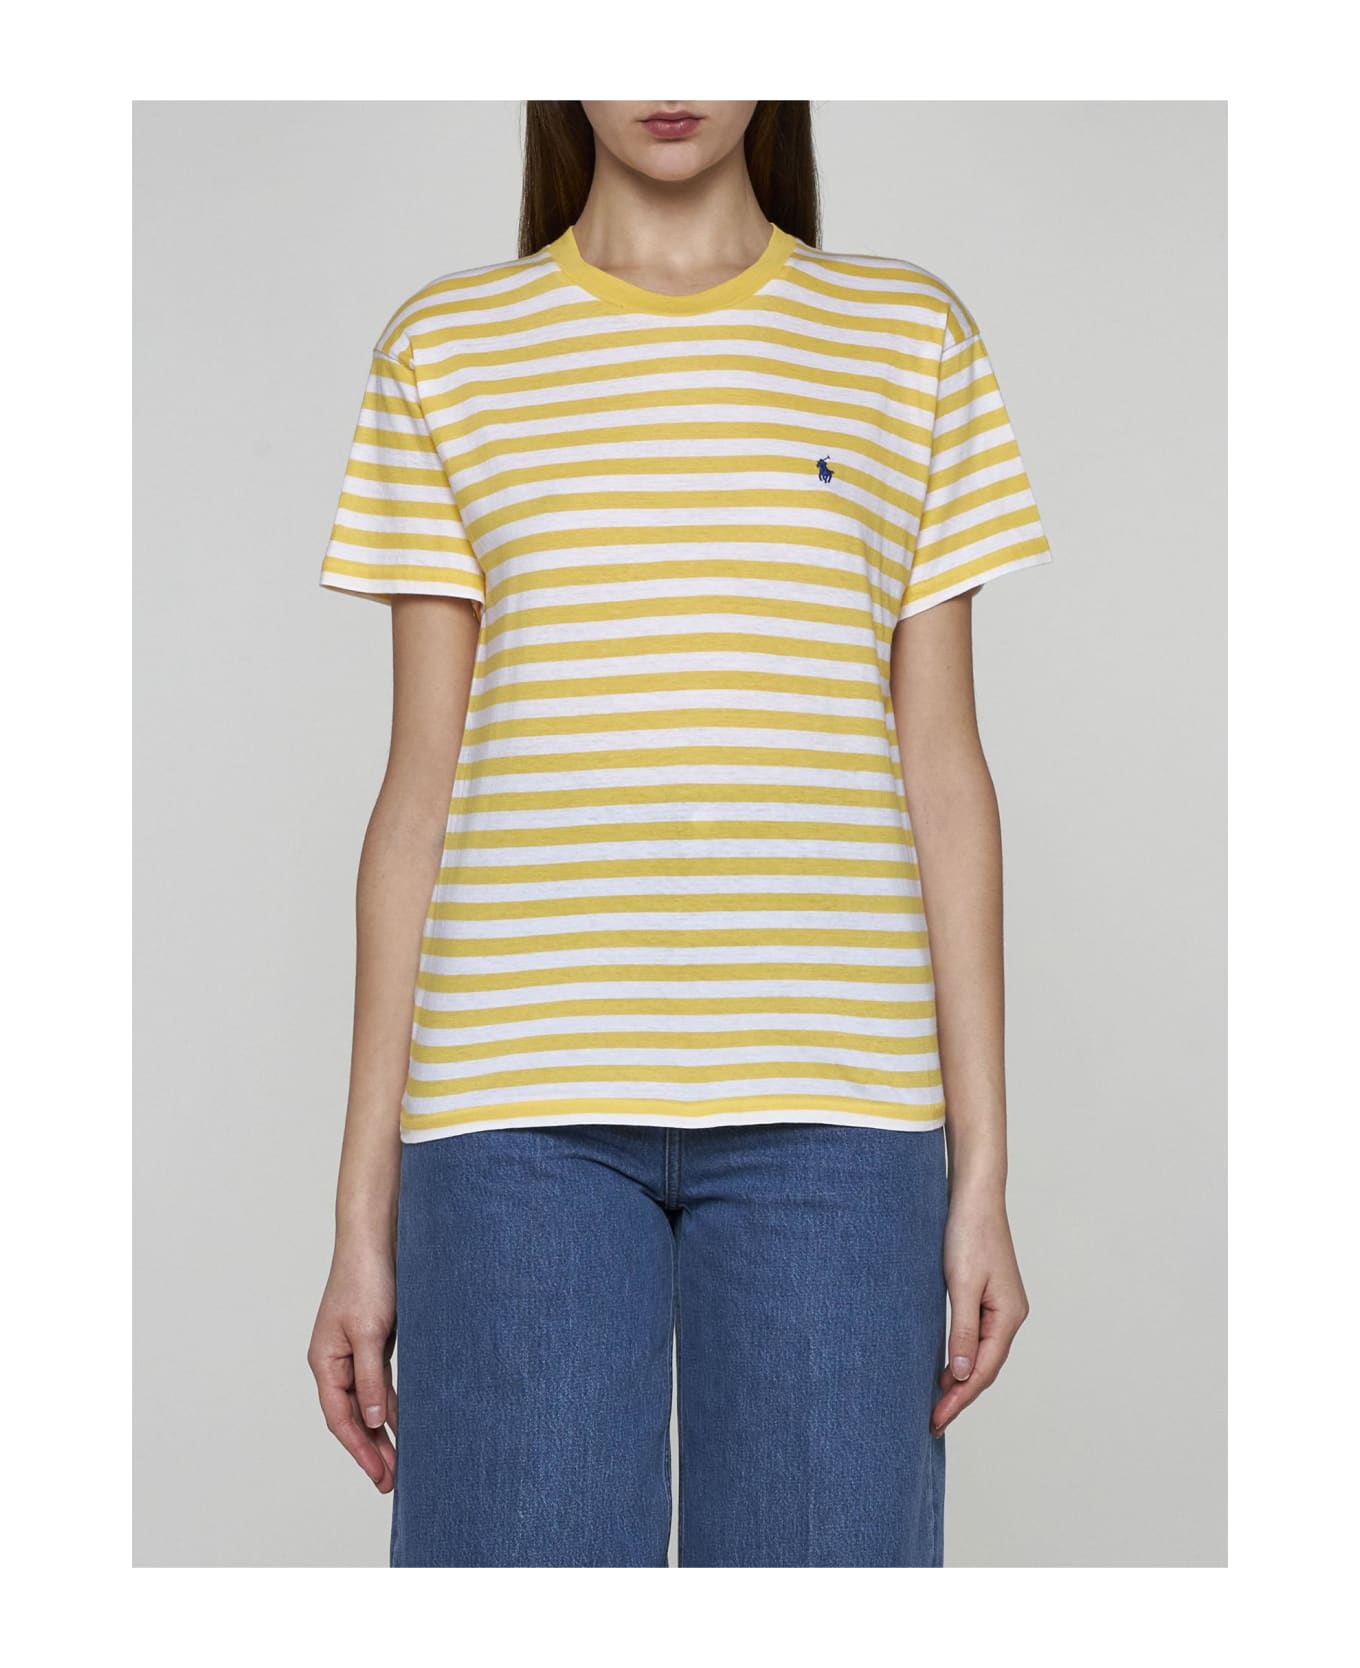 Ralph Lauren Striped Cotton T-shirt - Chrome Yellow White